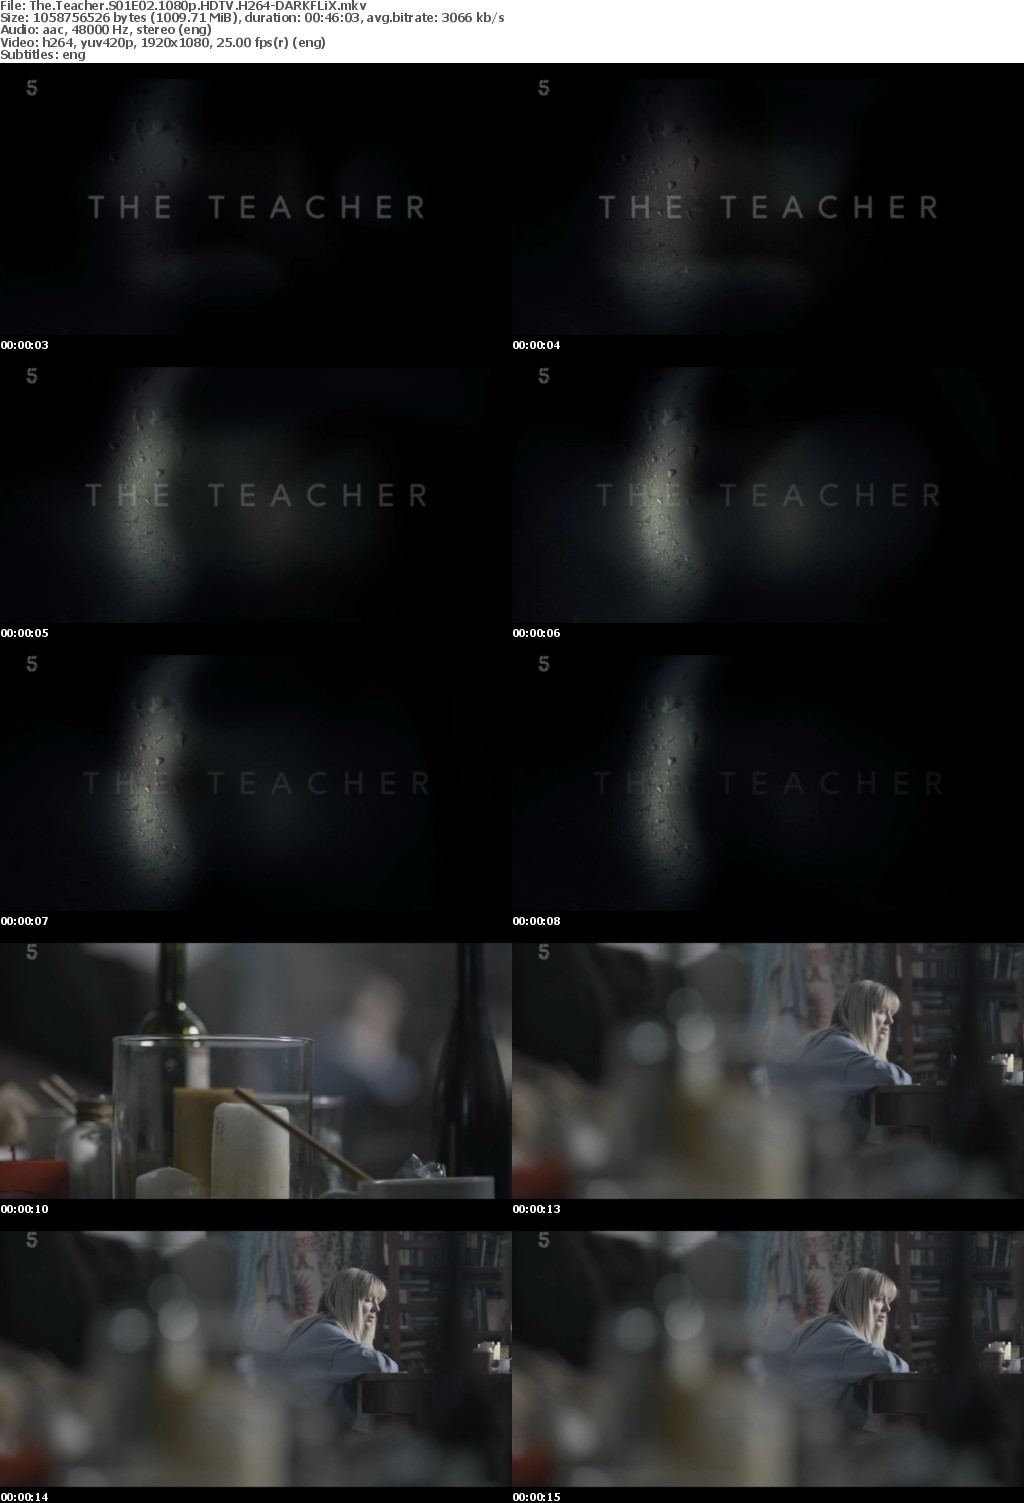 The Teacher S01E02 1080p HDTV H264-DARKFLiX